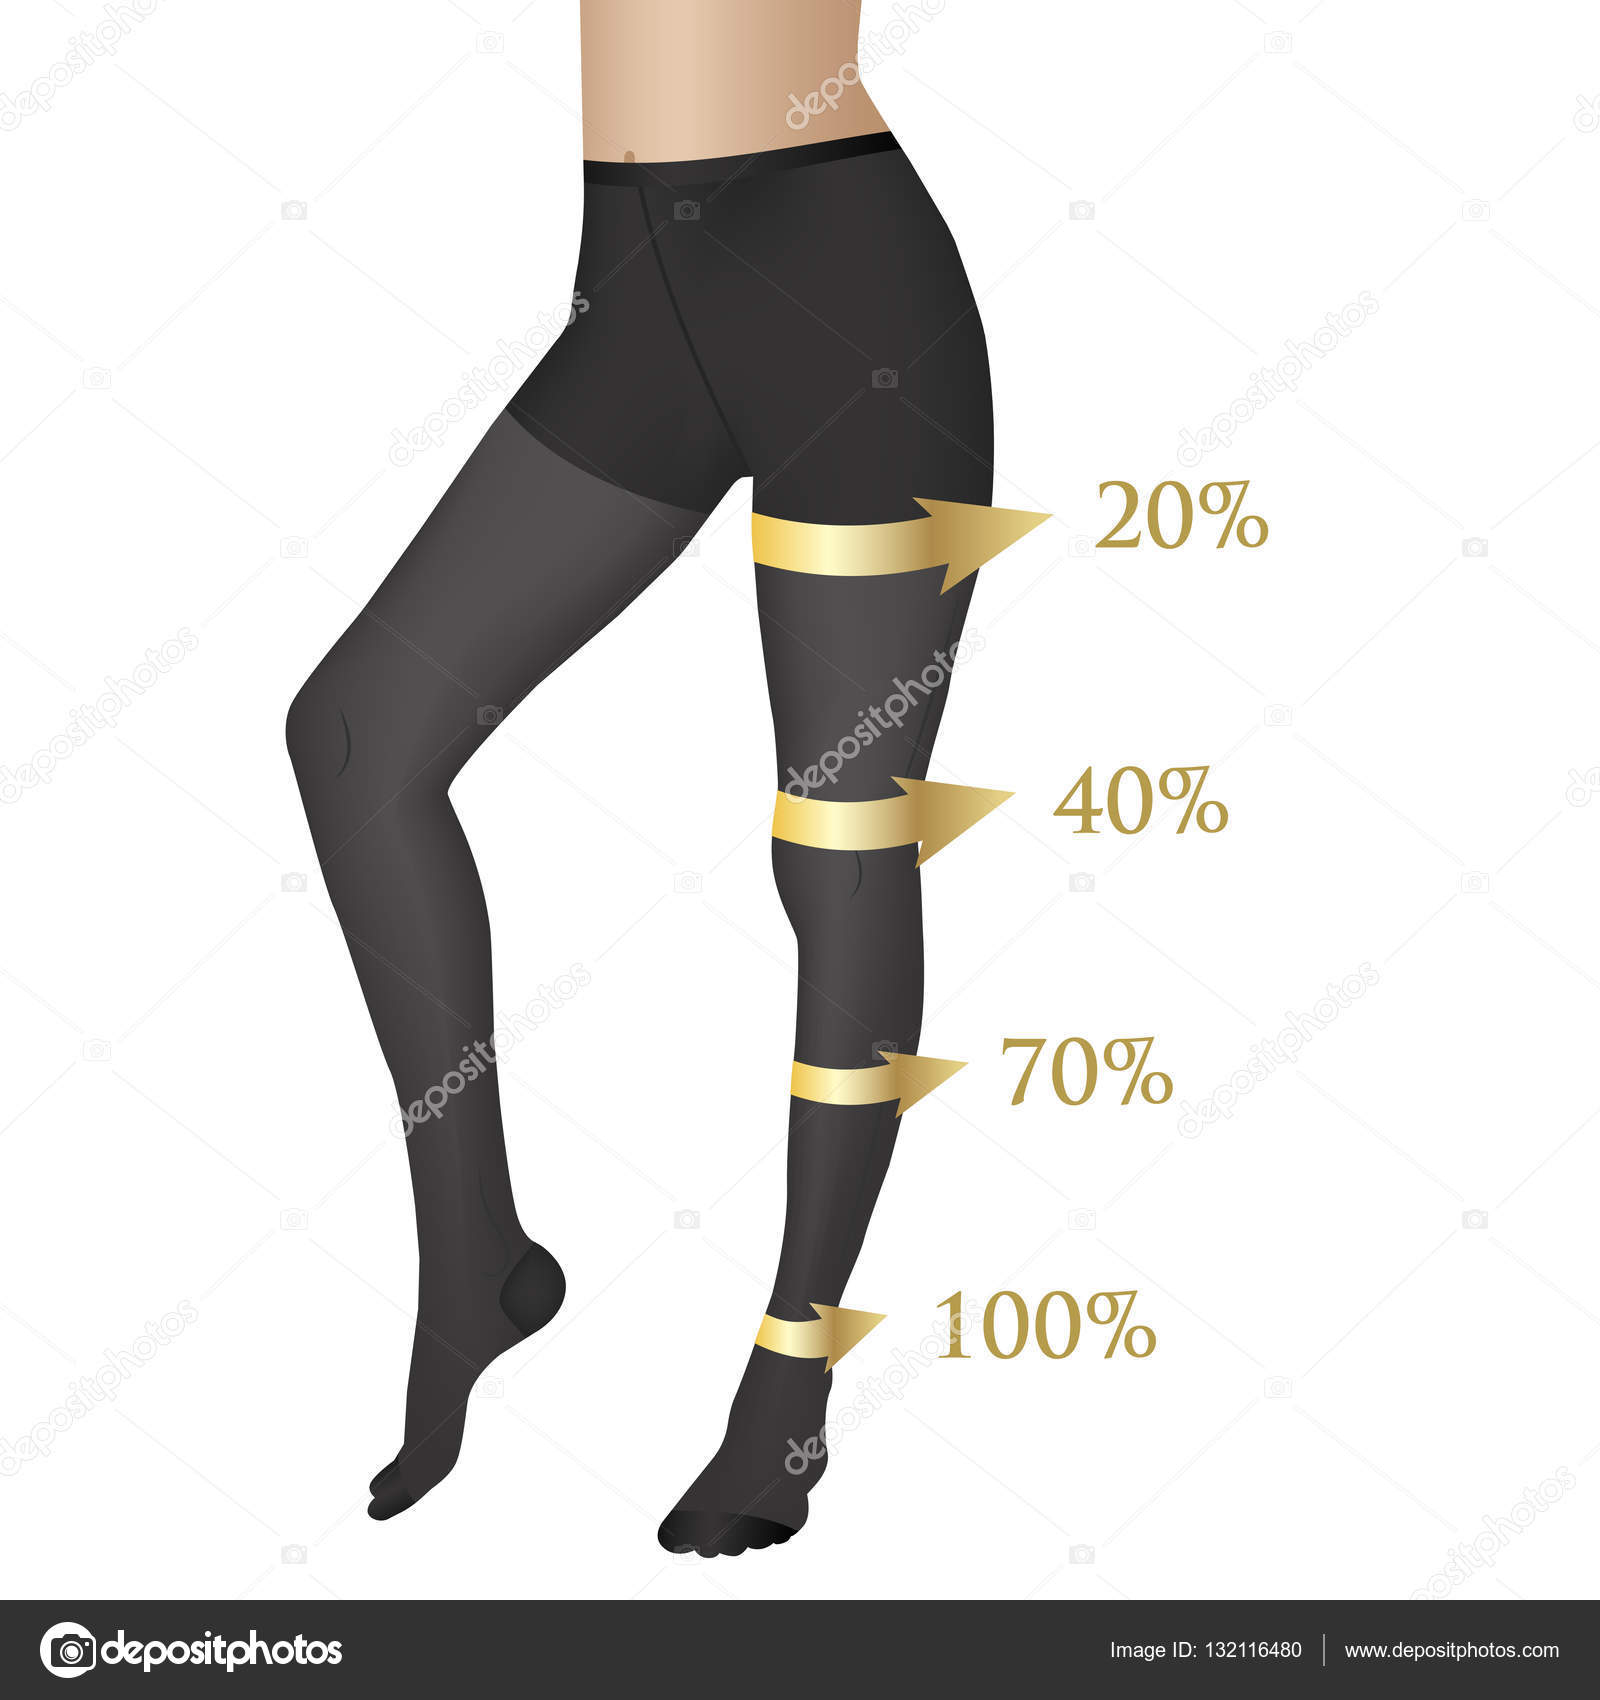 https://st3.depositphotos.com/7949126/13211/v/1600/depositphotos_132116480-stock-illustration-vector-medical-compression-tights.jpg